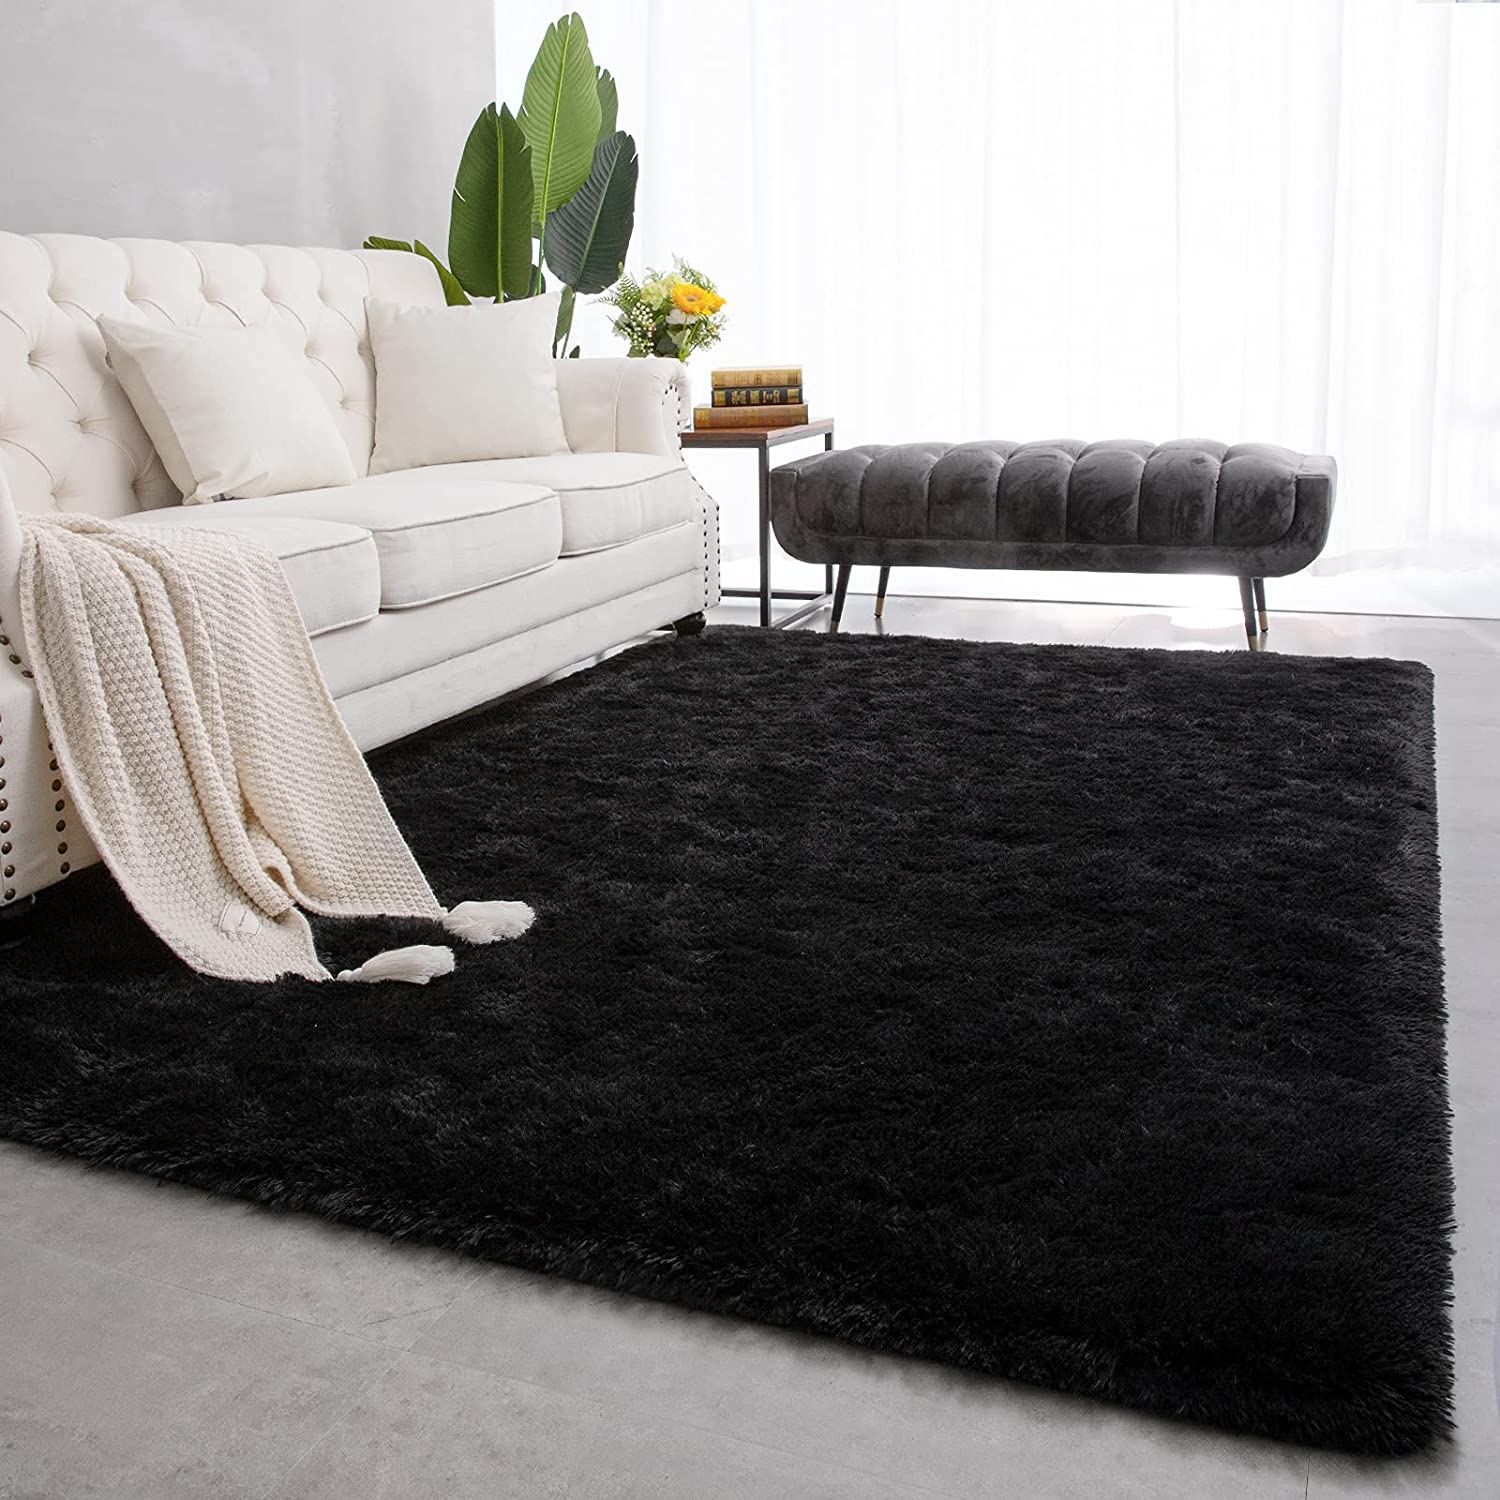 Wellber Modern Soft Shaggy Rugs Black Fluffy Home Decorative Carpet